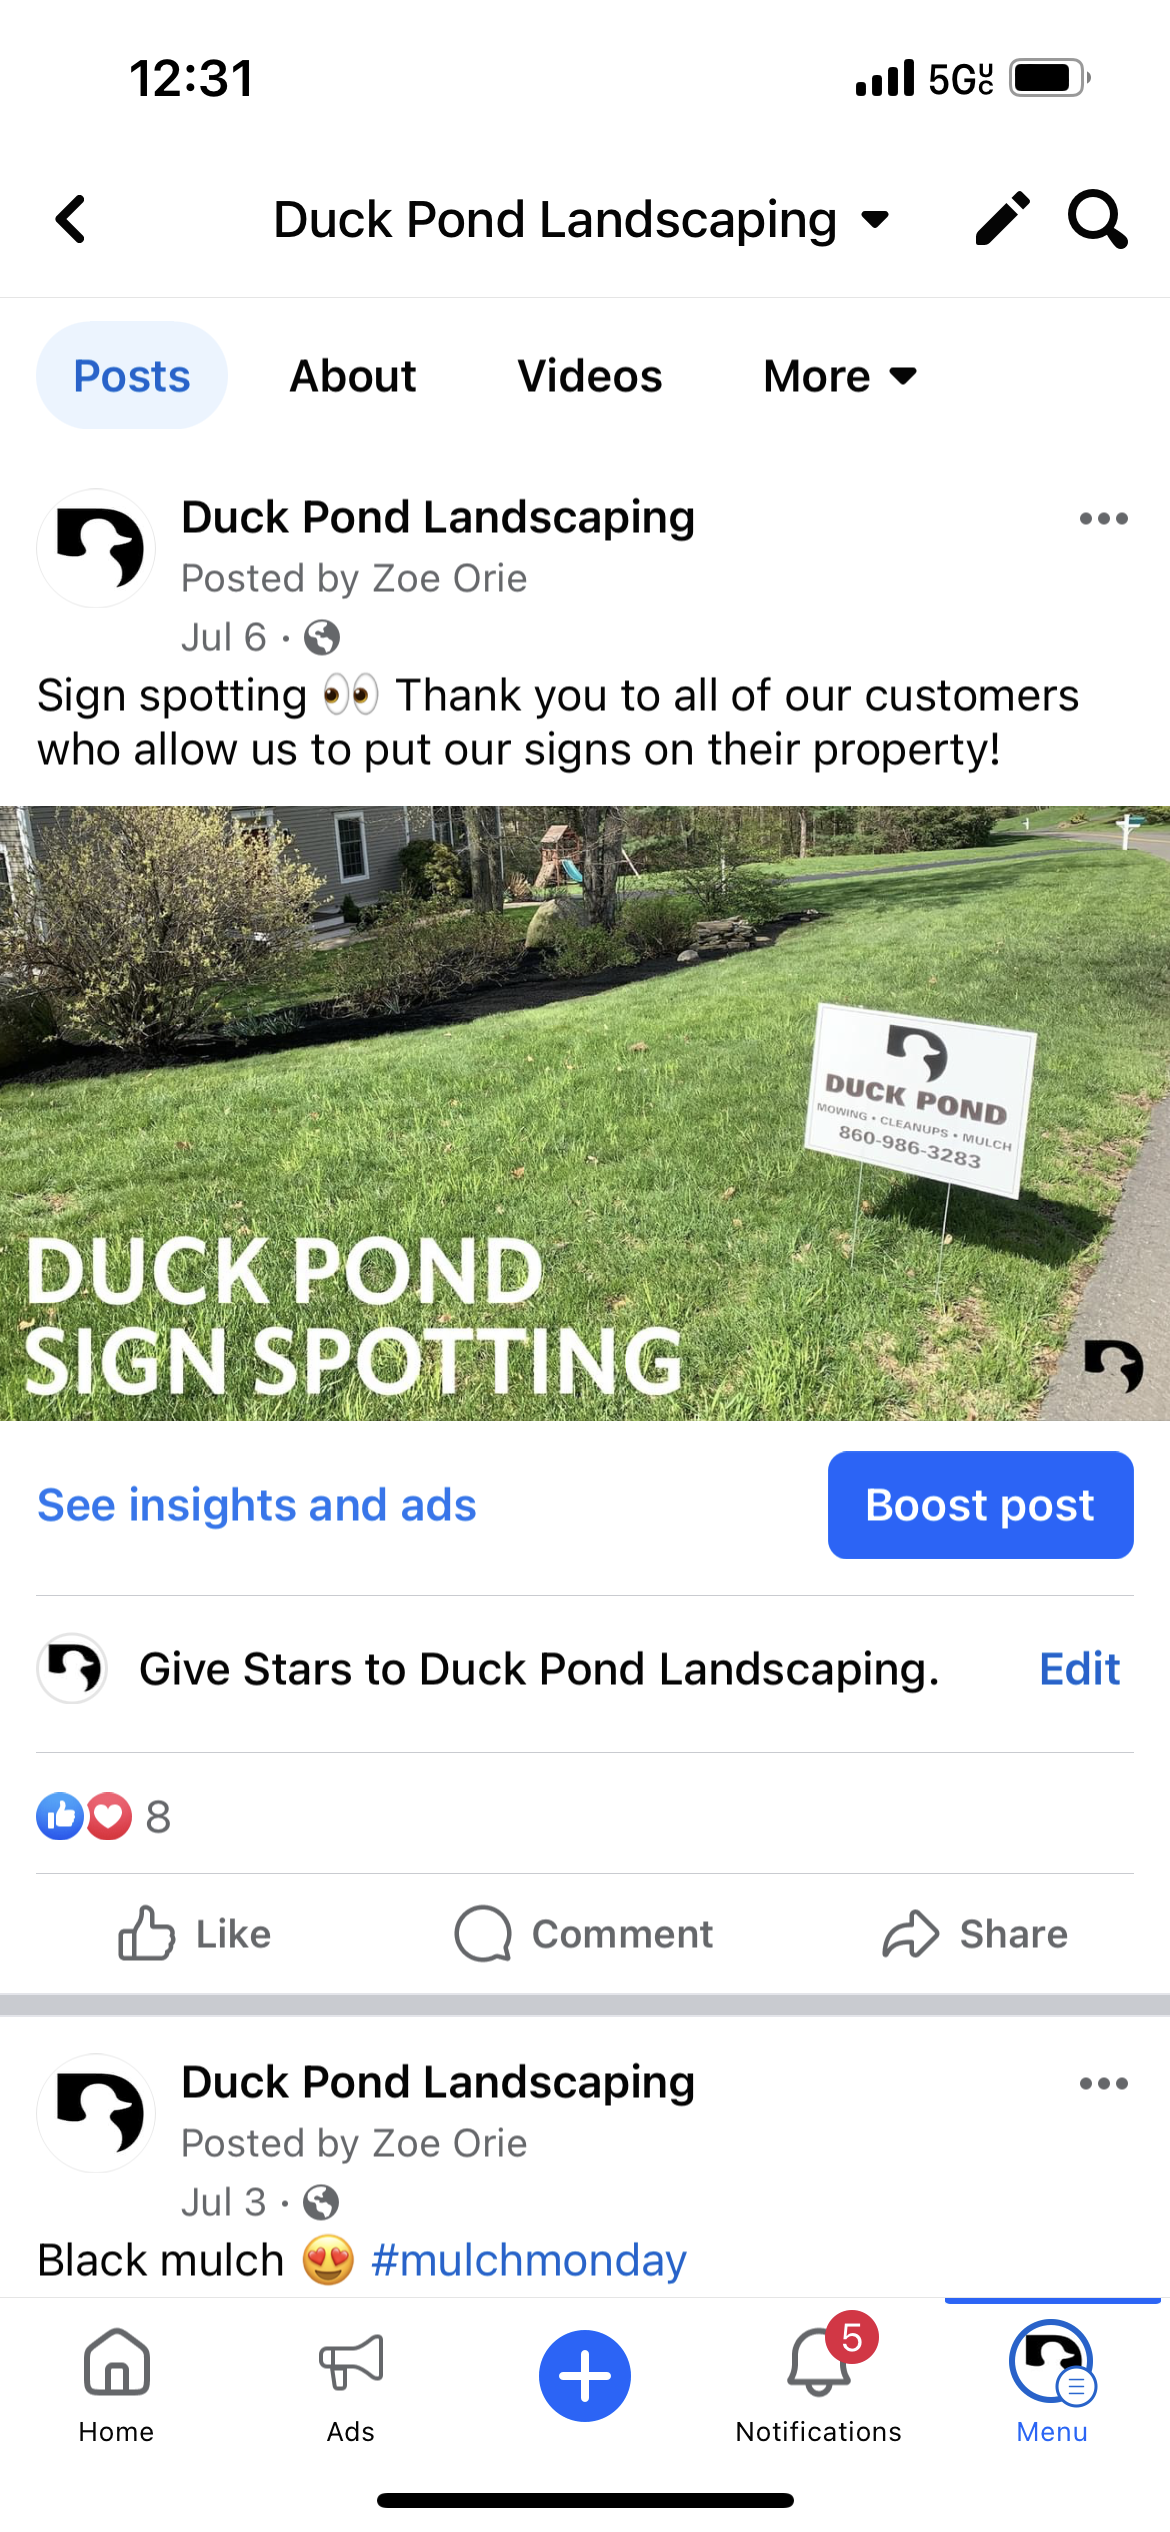 duck pond sign spotting post